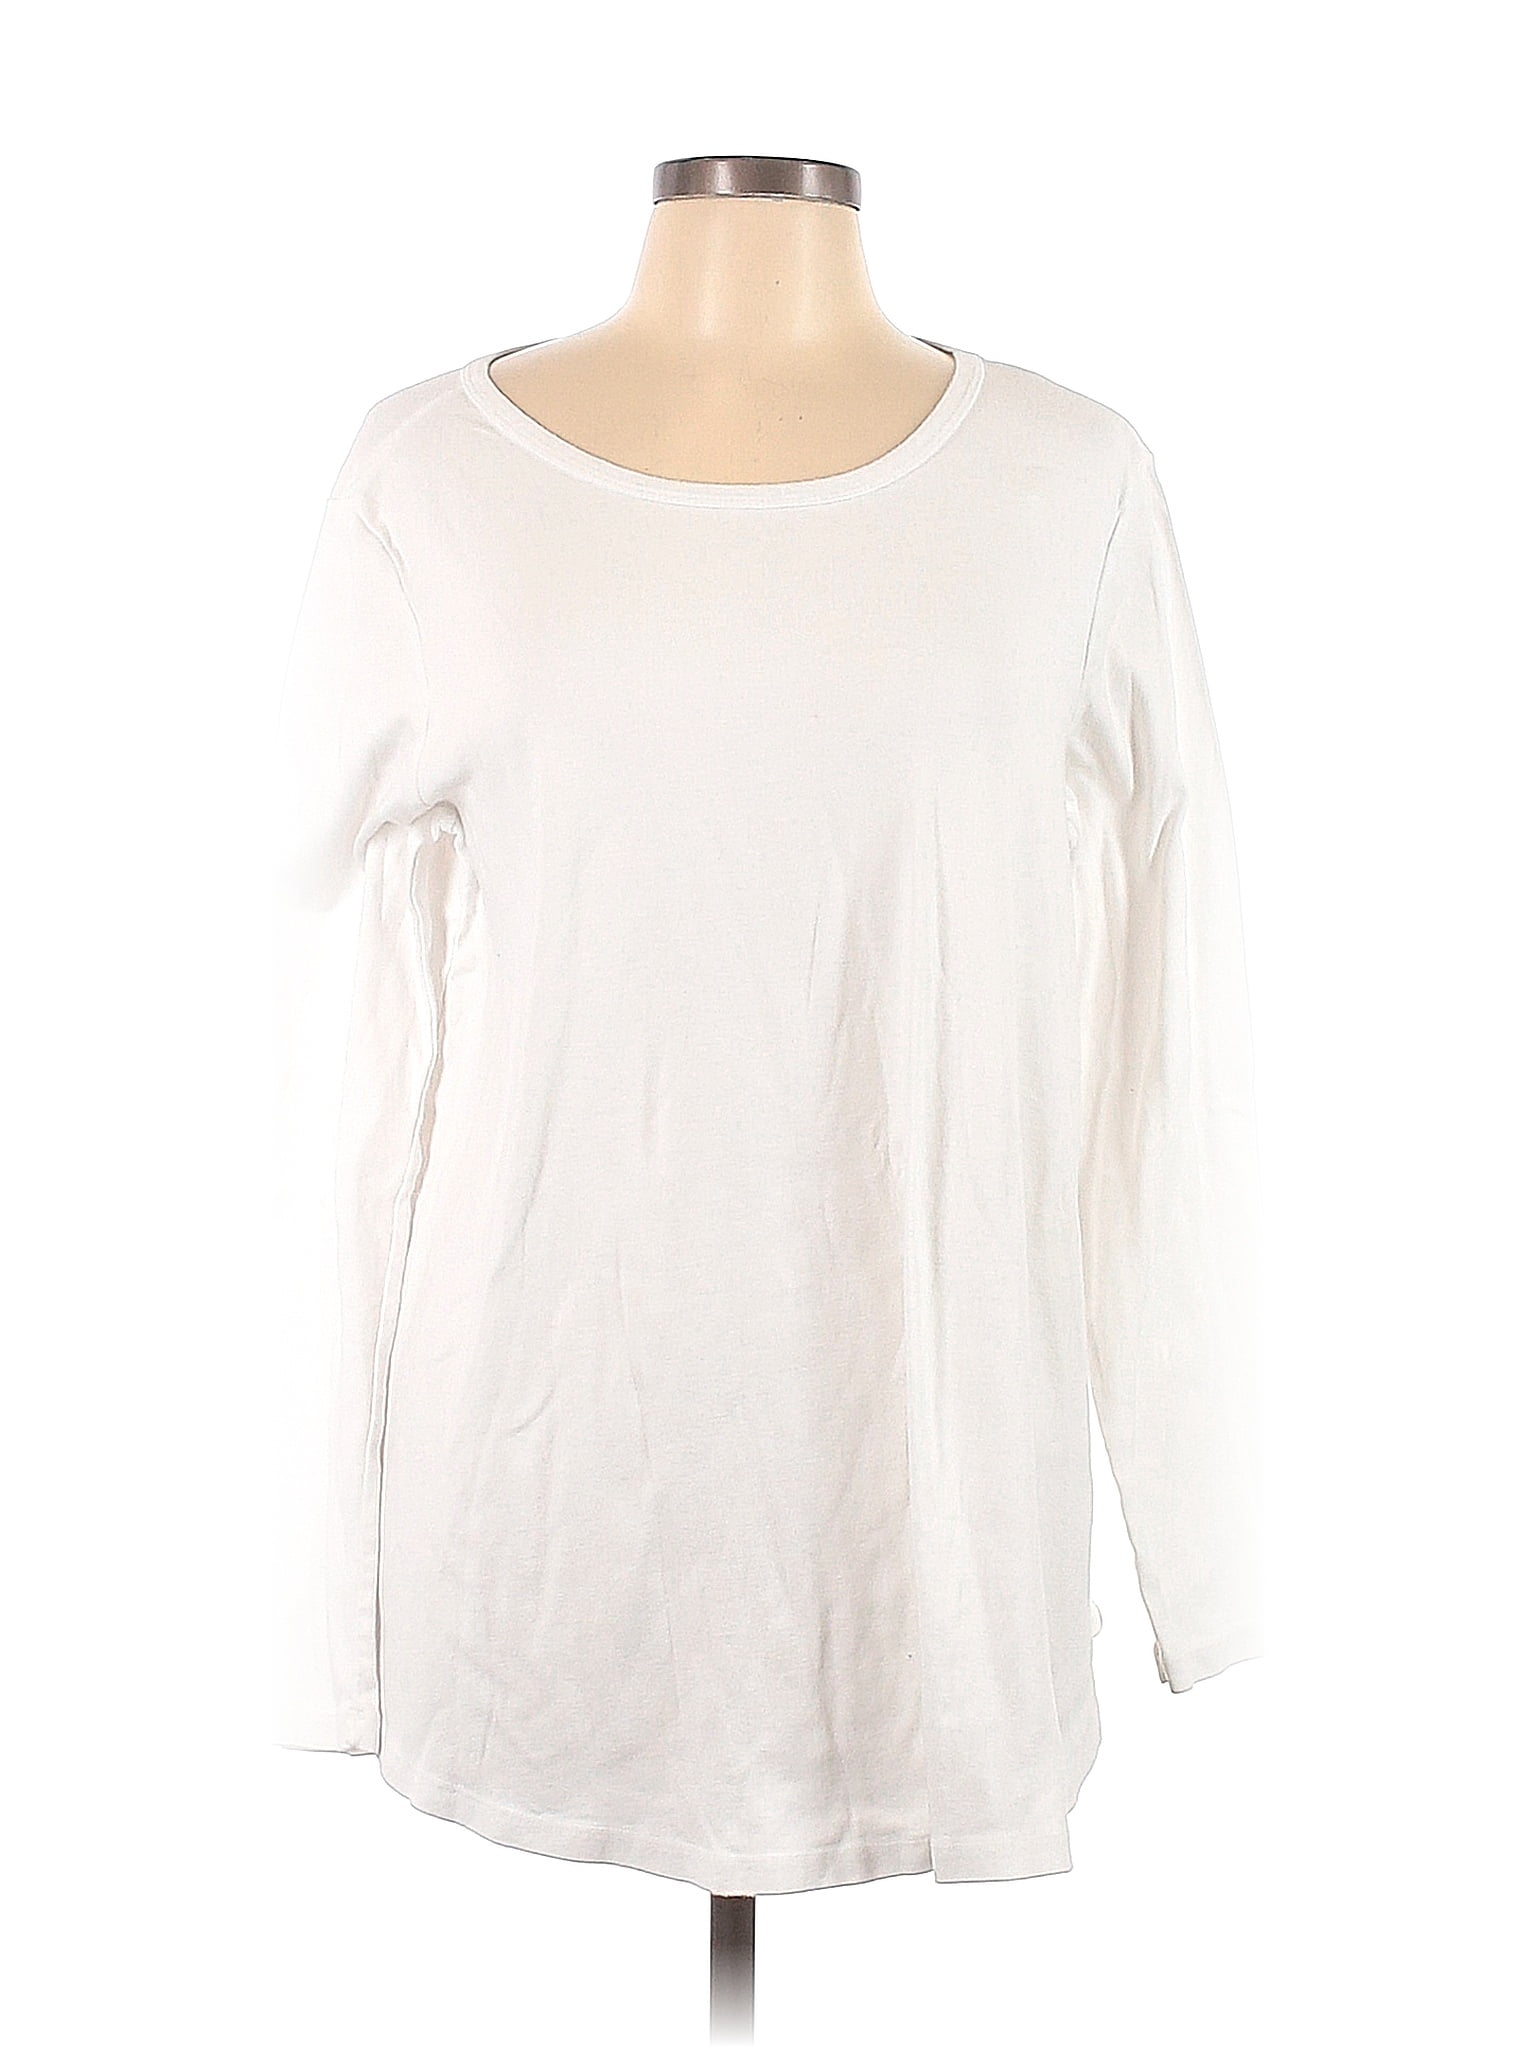 Prairie Cotton 100% Cotton White Long Sleeve T-Shirt Size L - 31% off ...